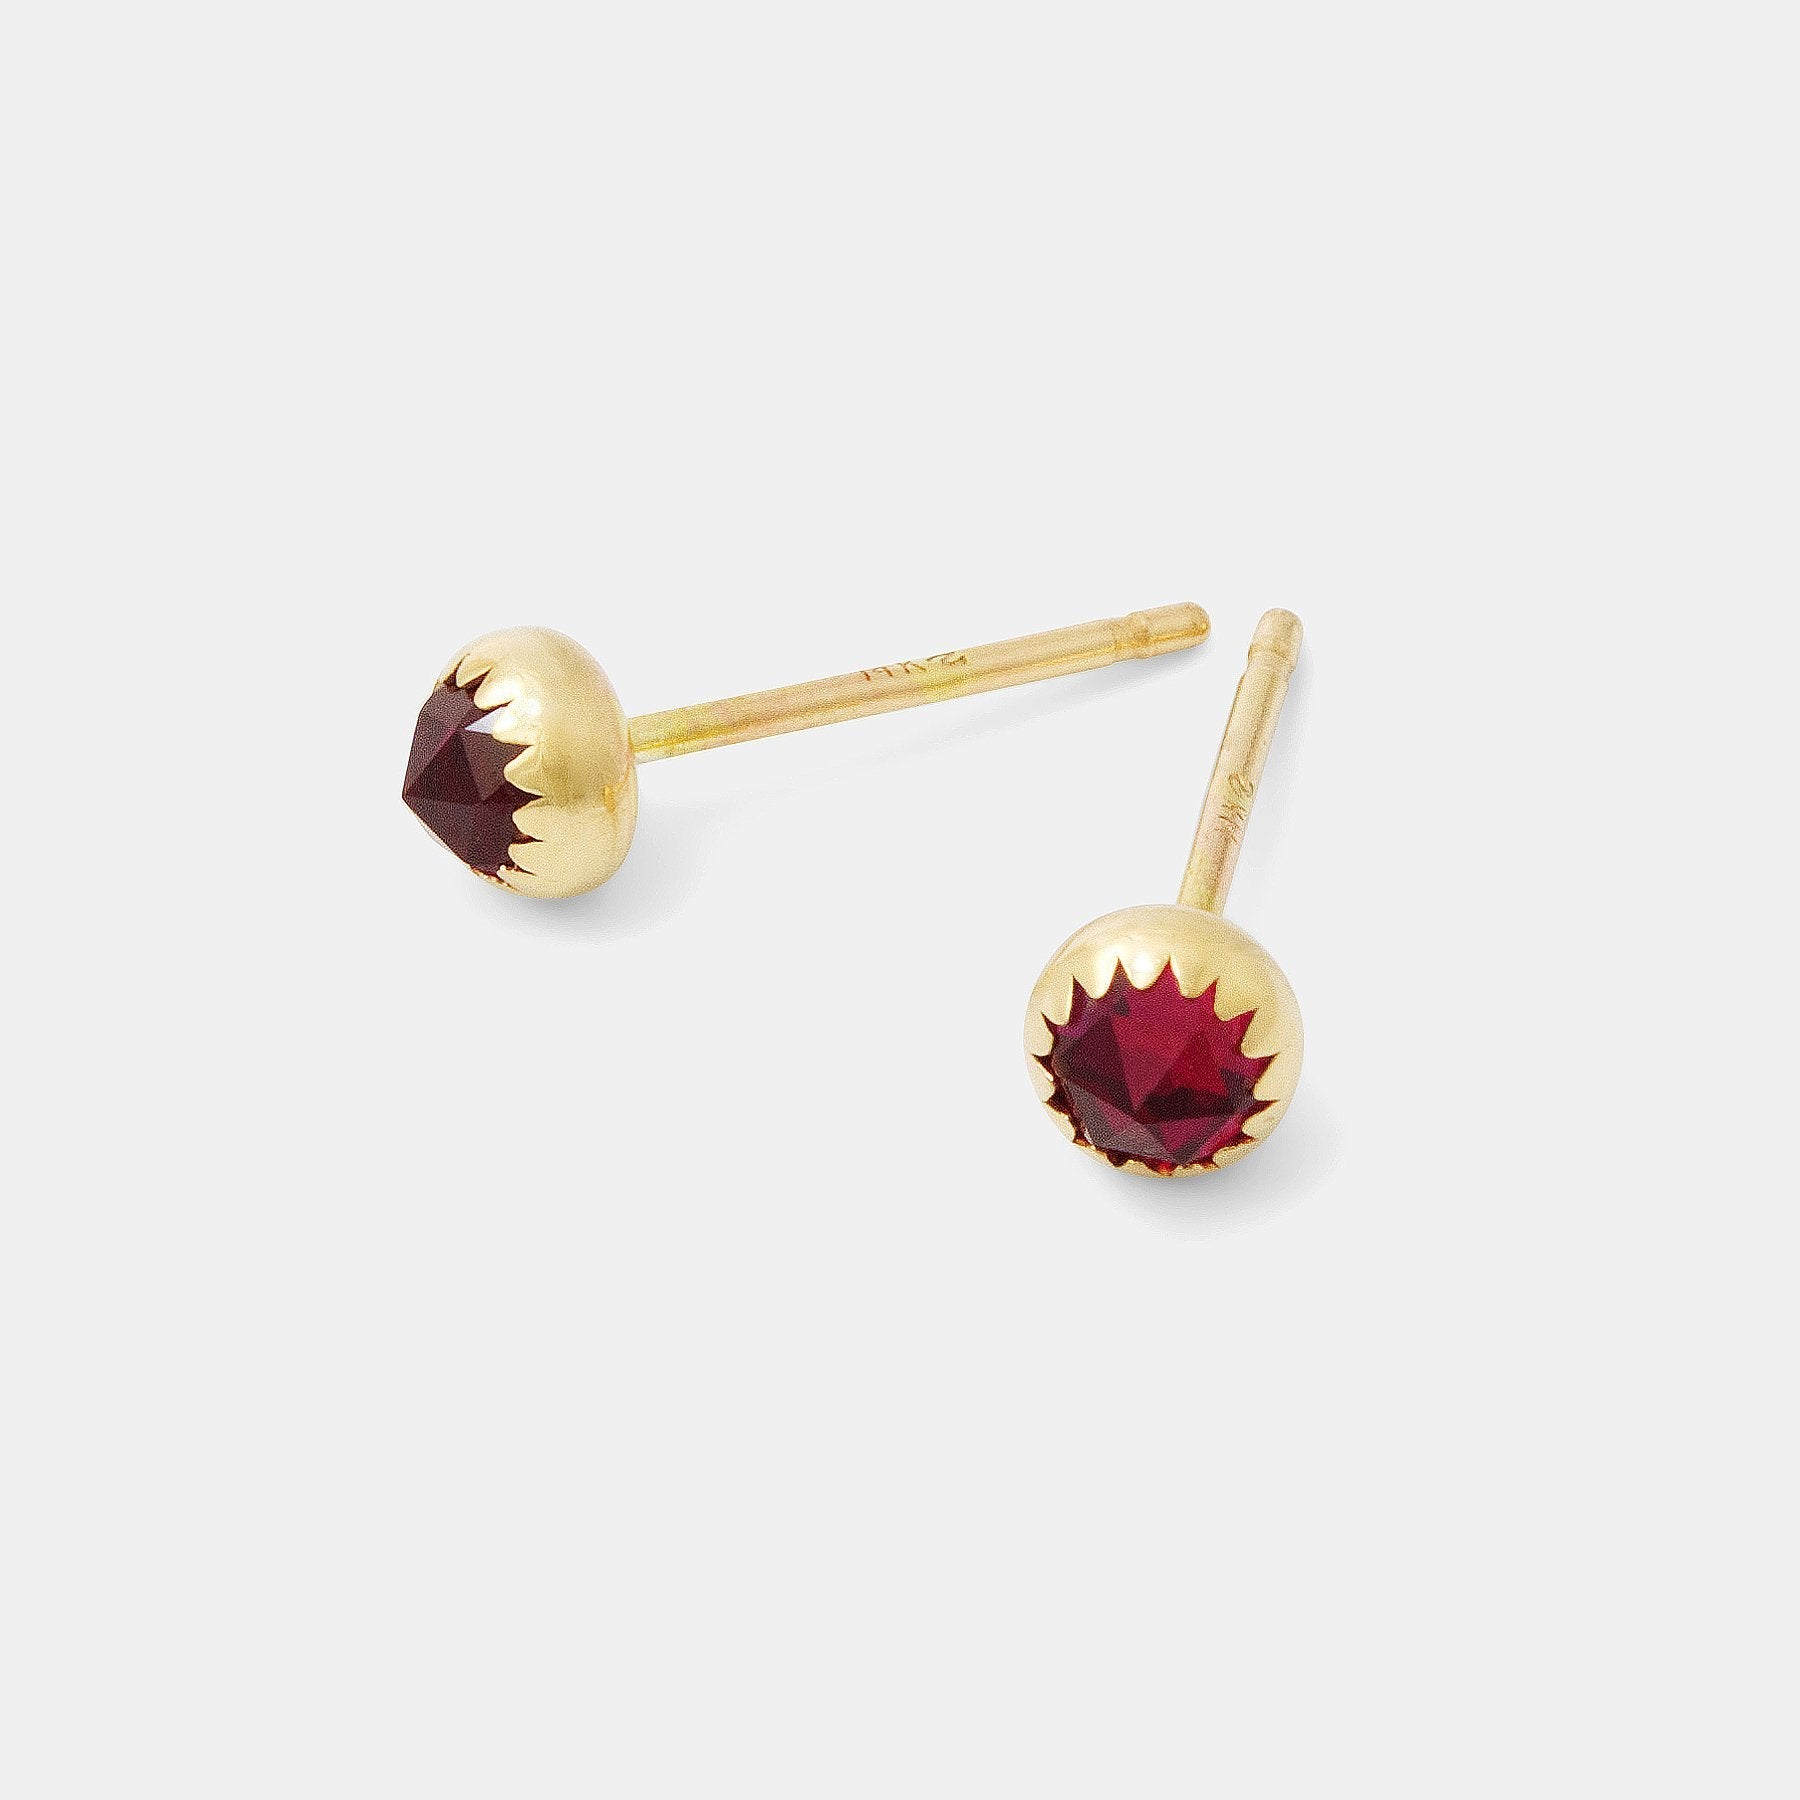 Ruby rose cut & solid gold stud earrings - Simone Walsh Jewellery Australia